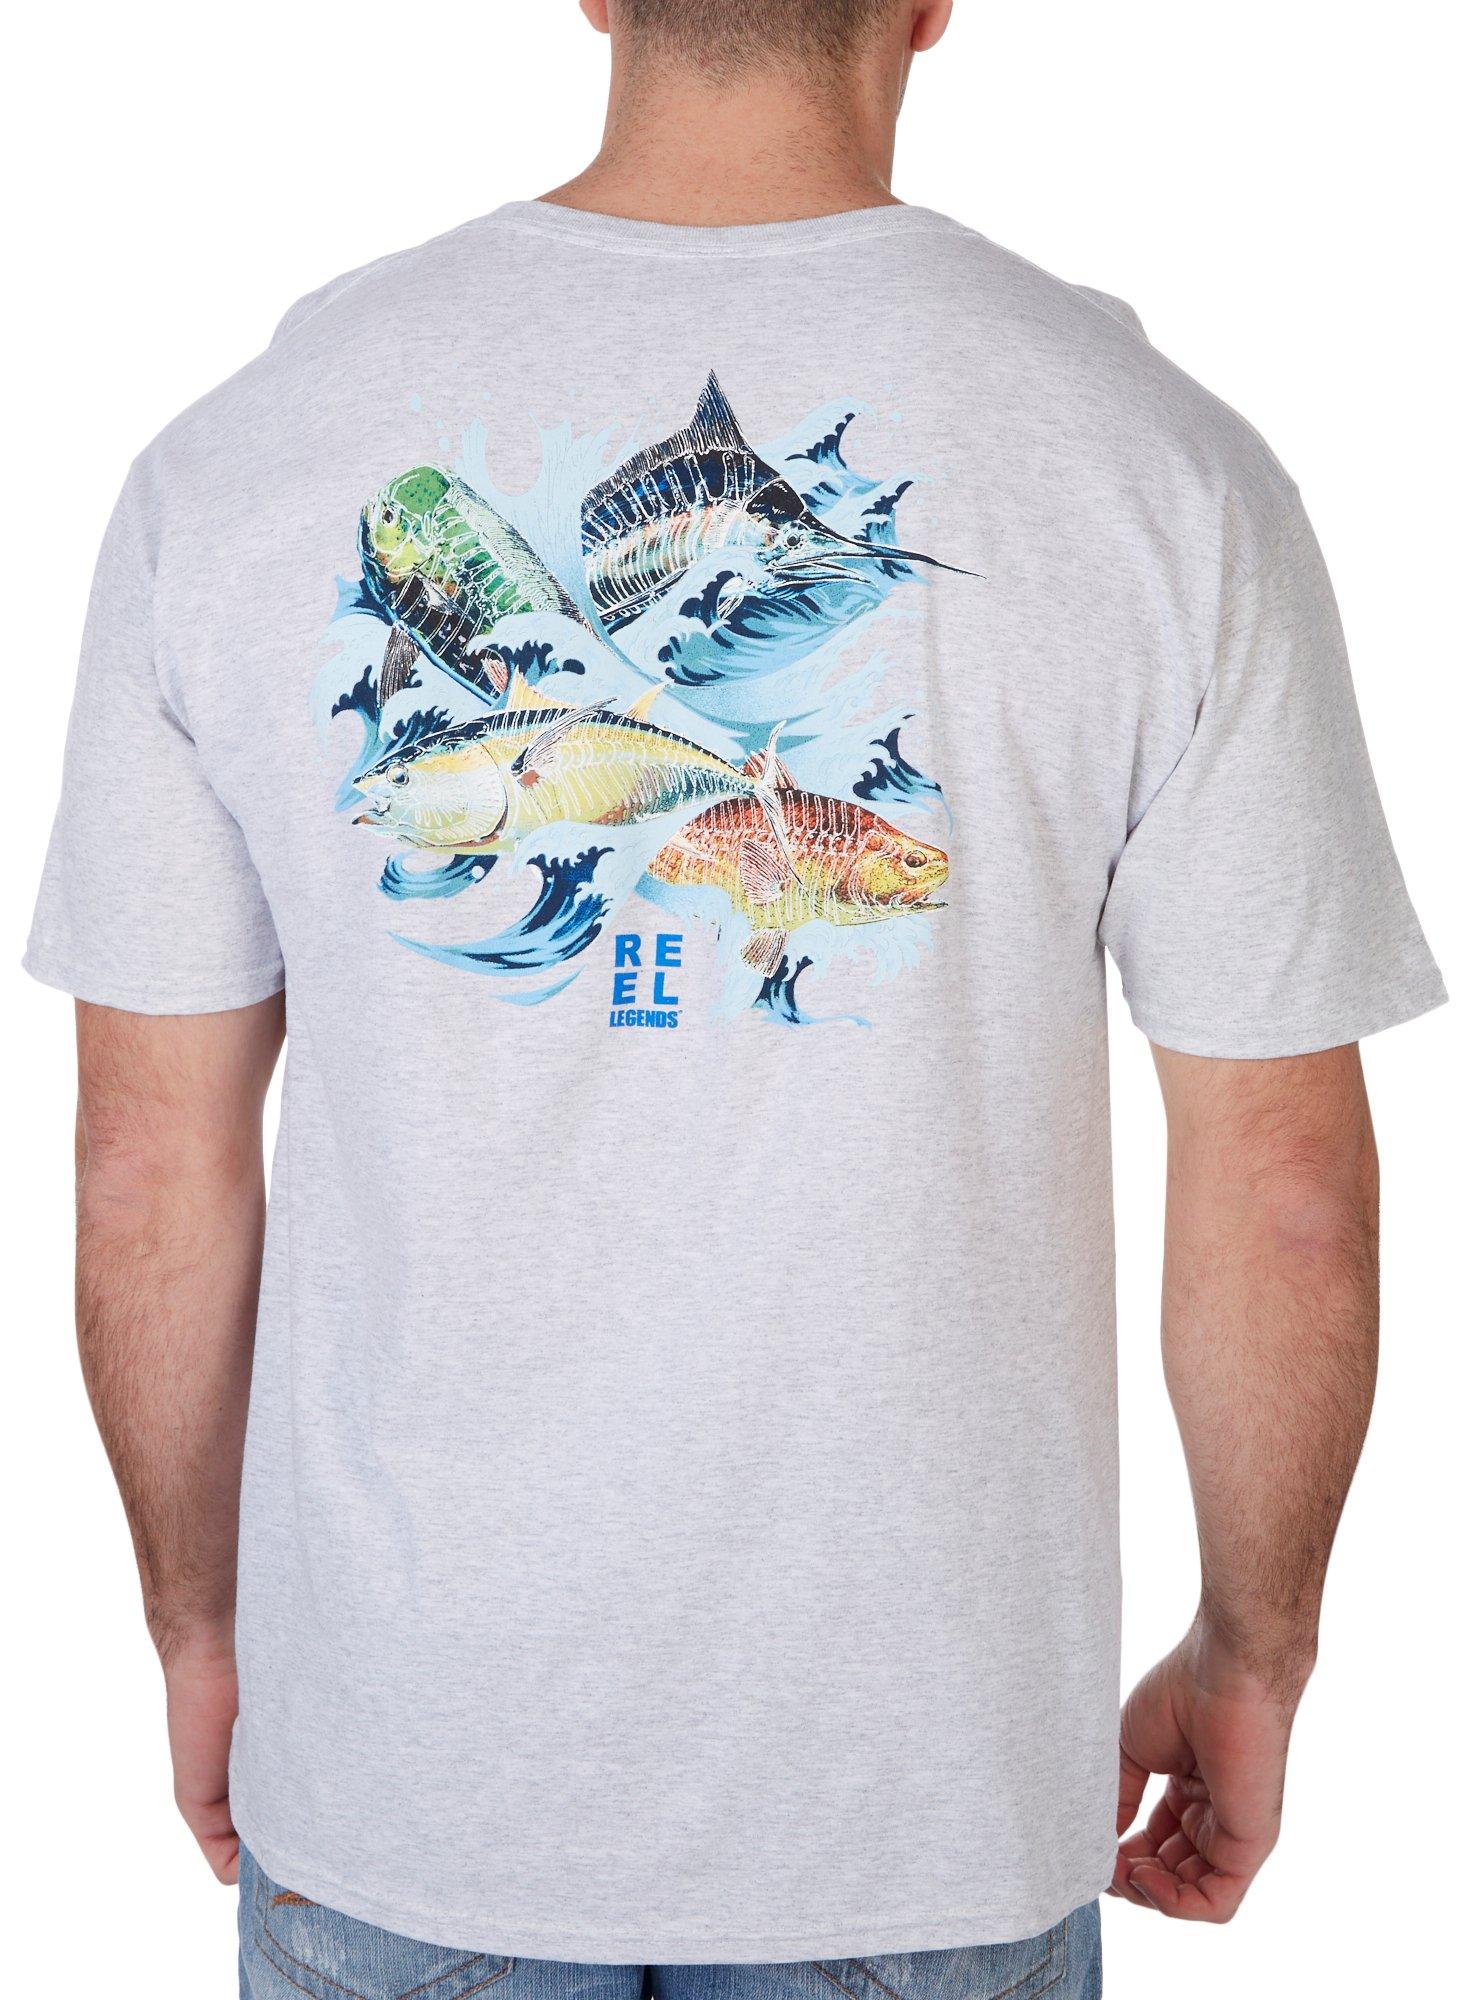 Fishing T-Shirts